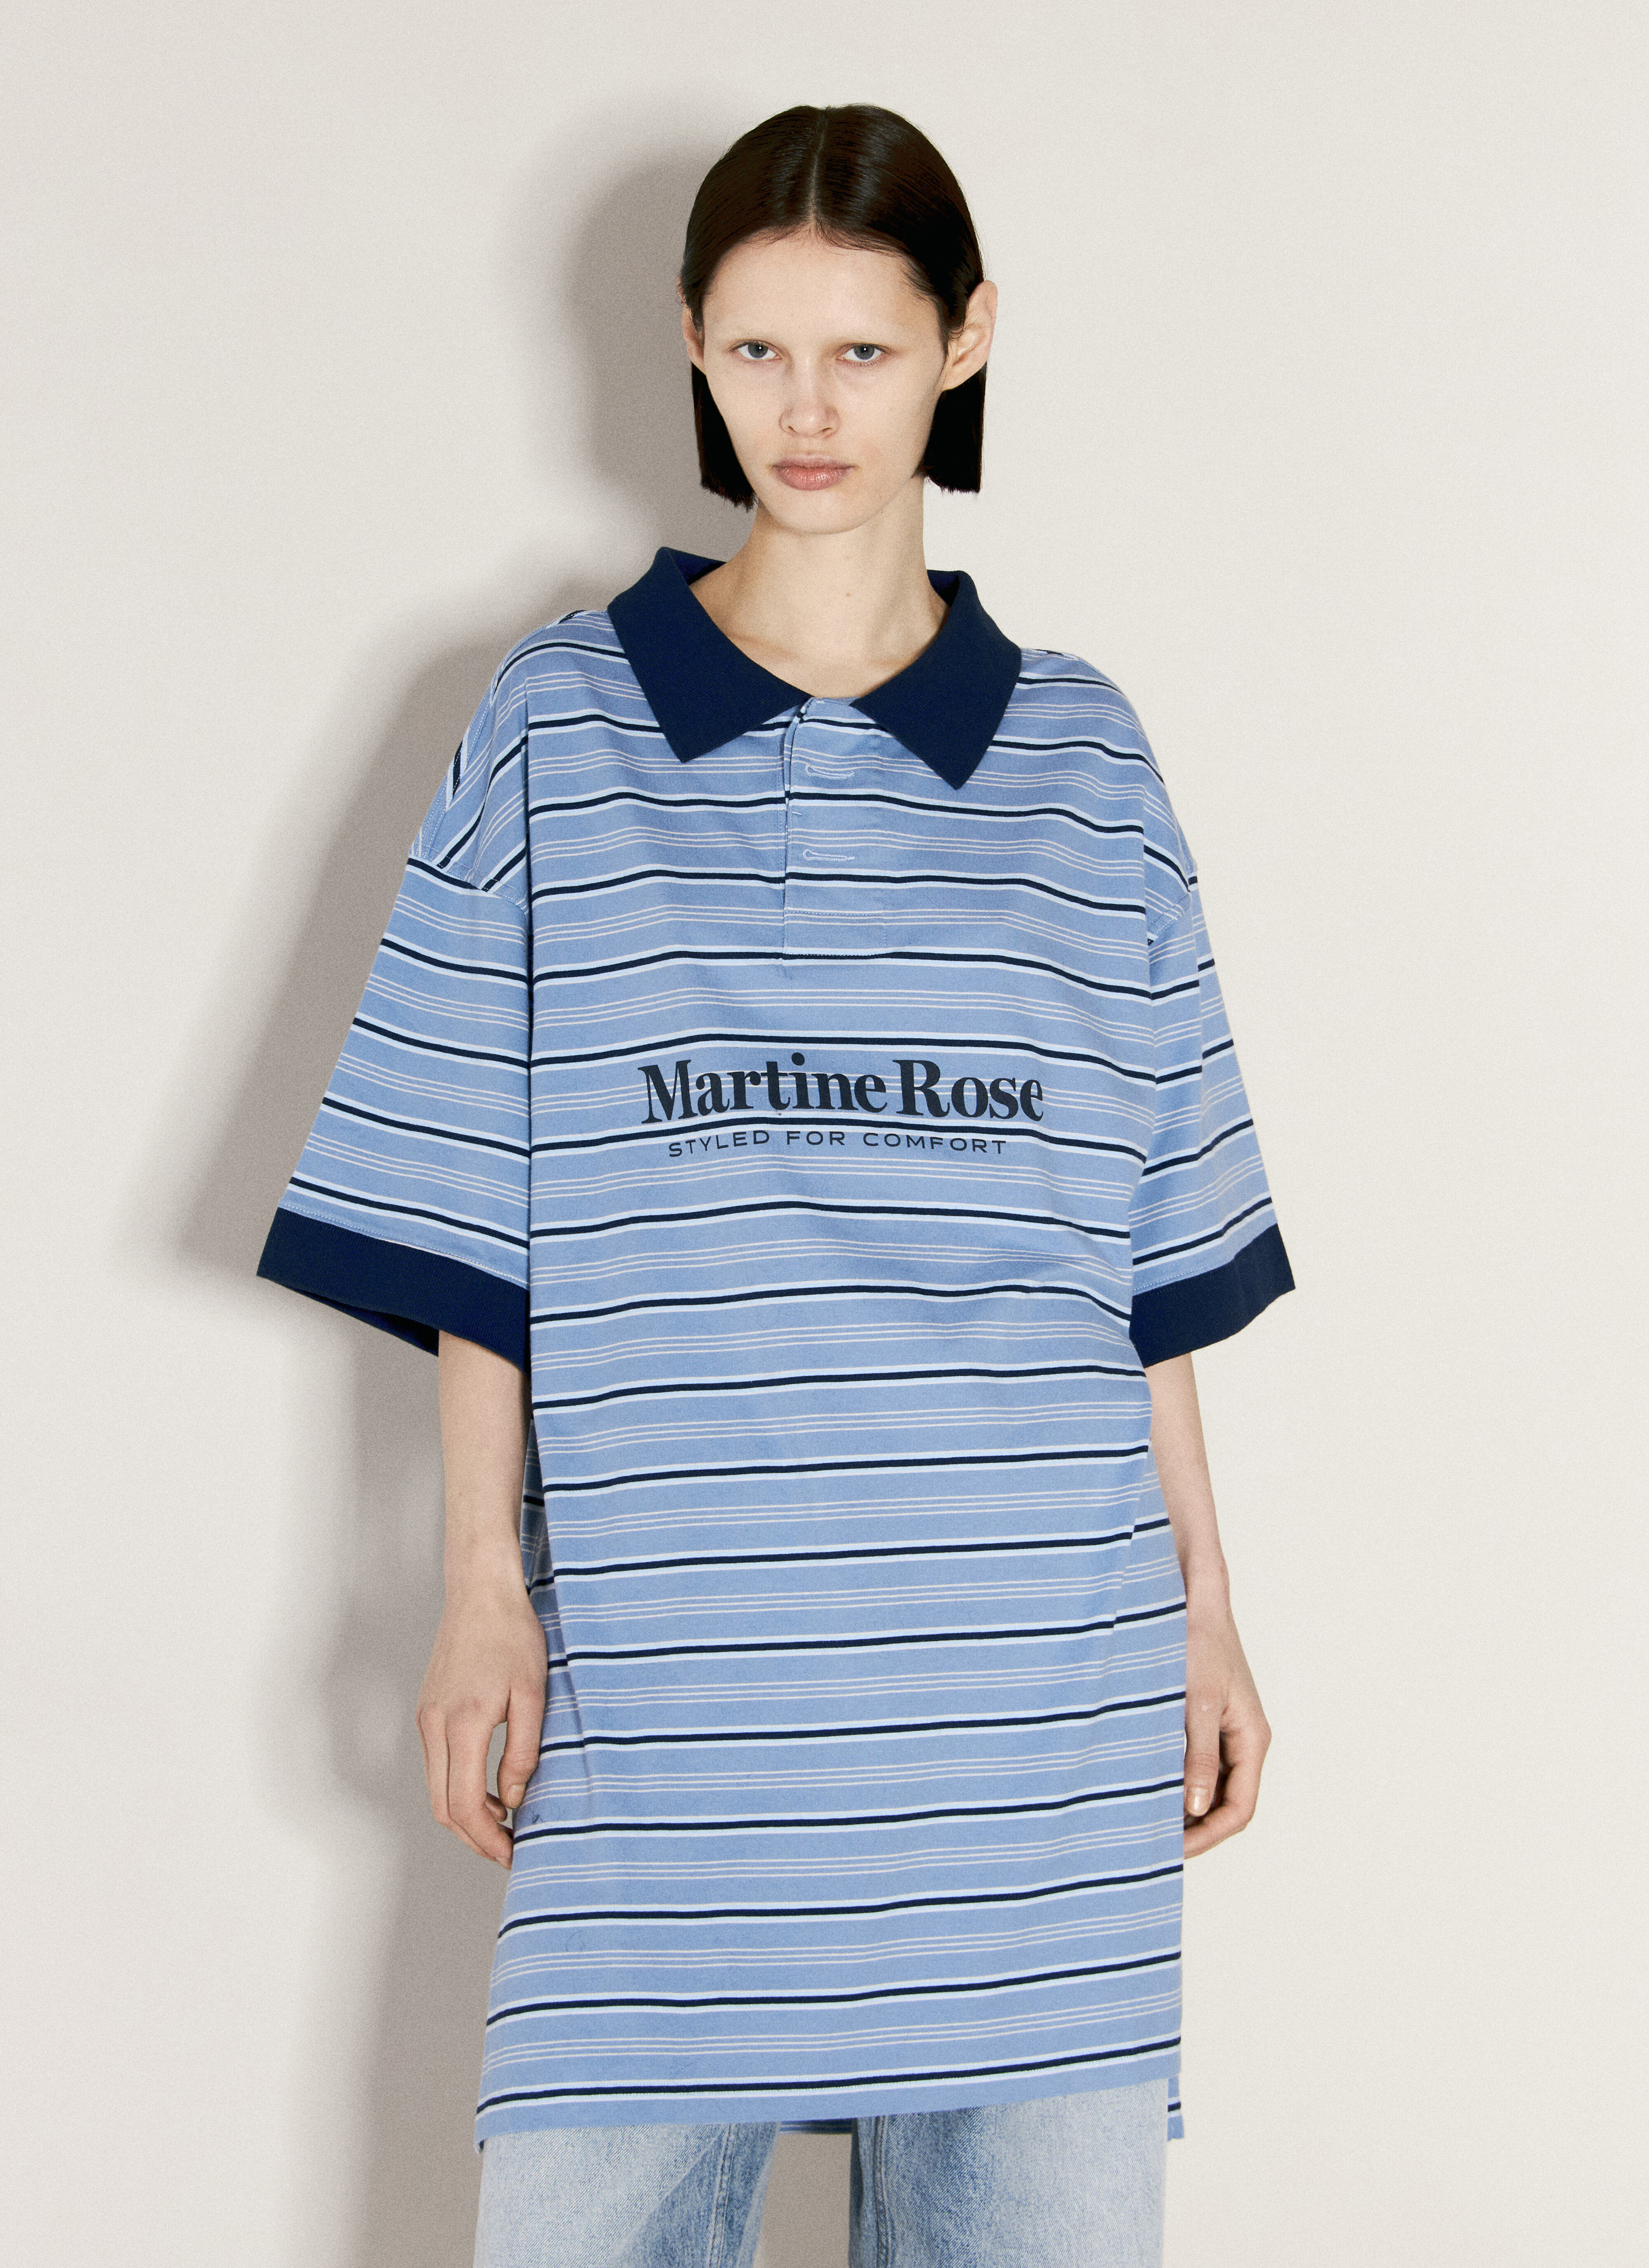 Martine Rose Striped Polo Shirt Blue mtr0356001